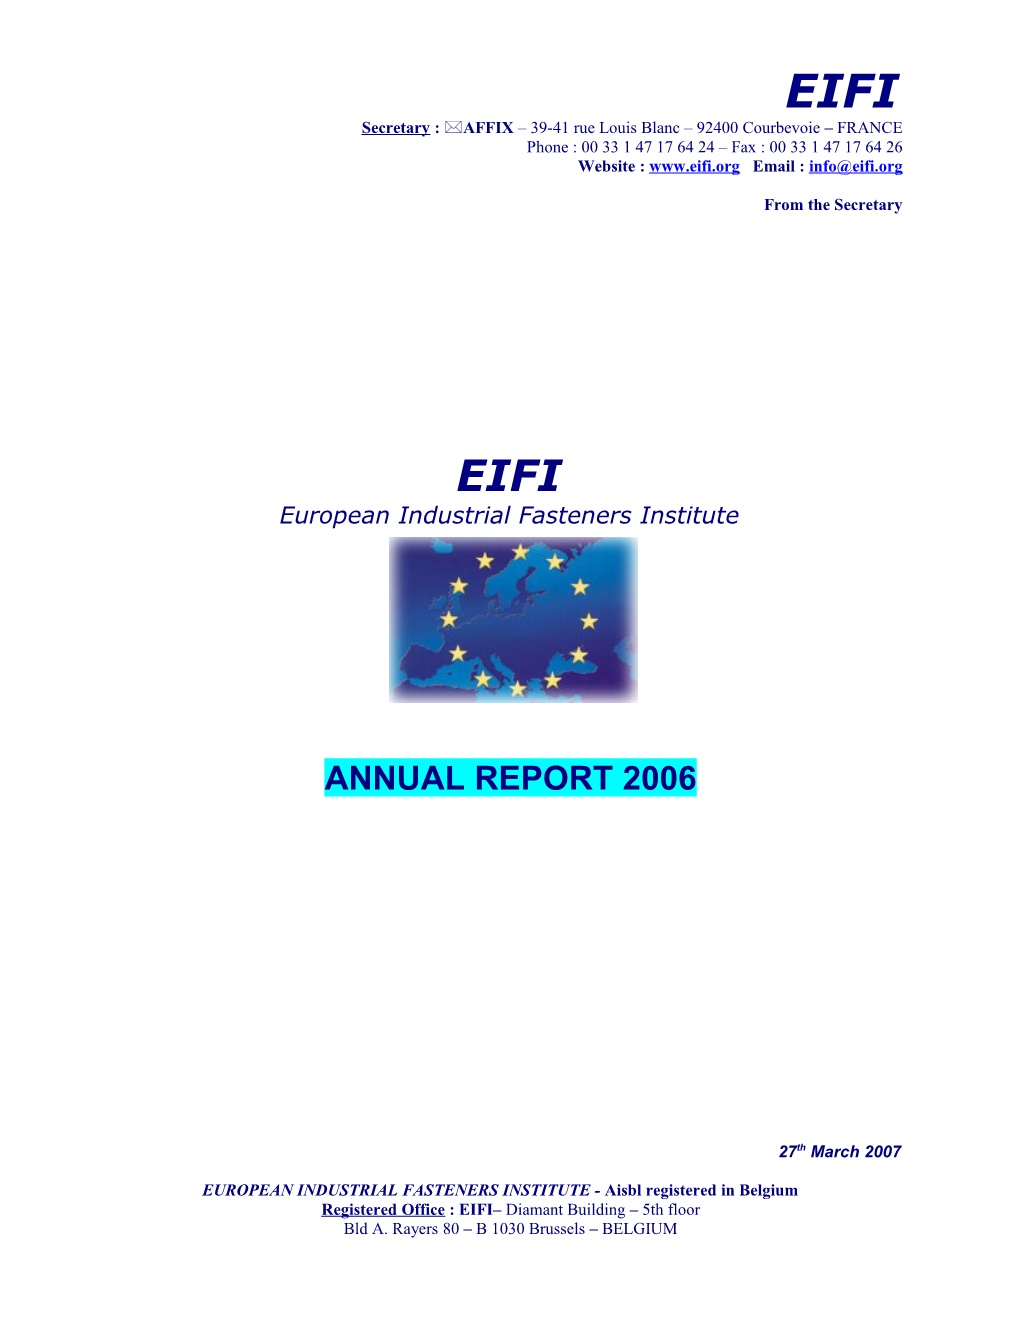 Eifi Annual Report 2006